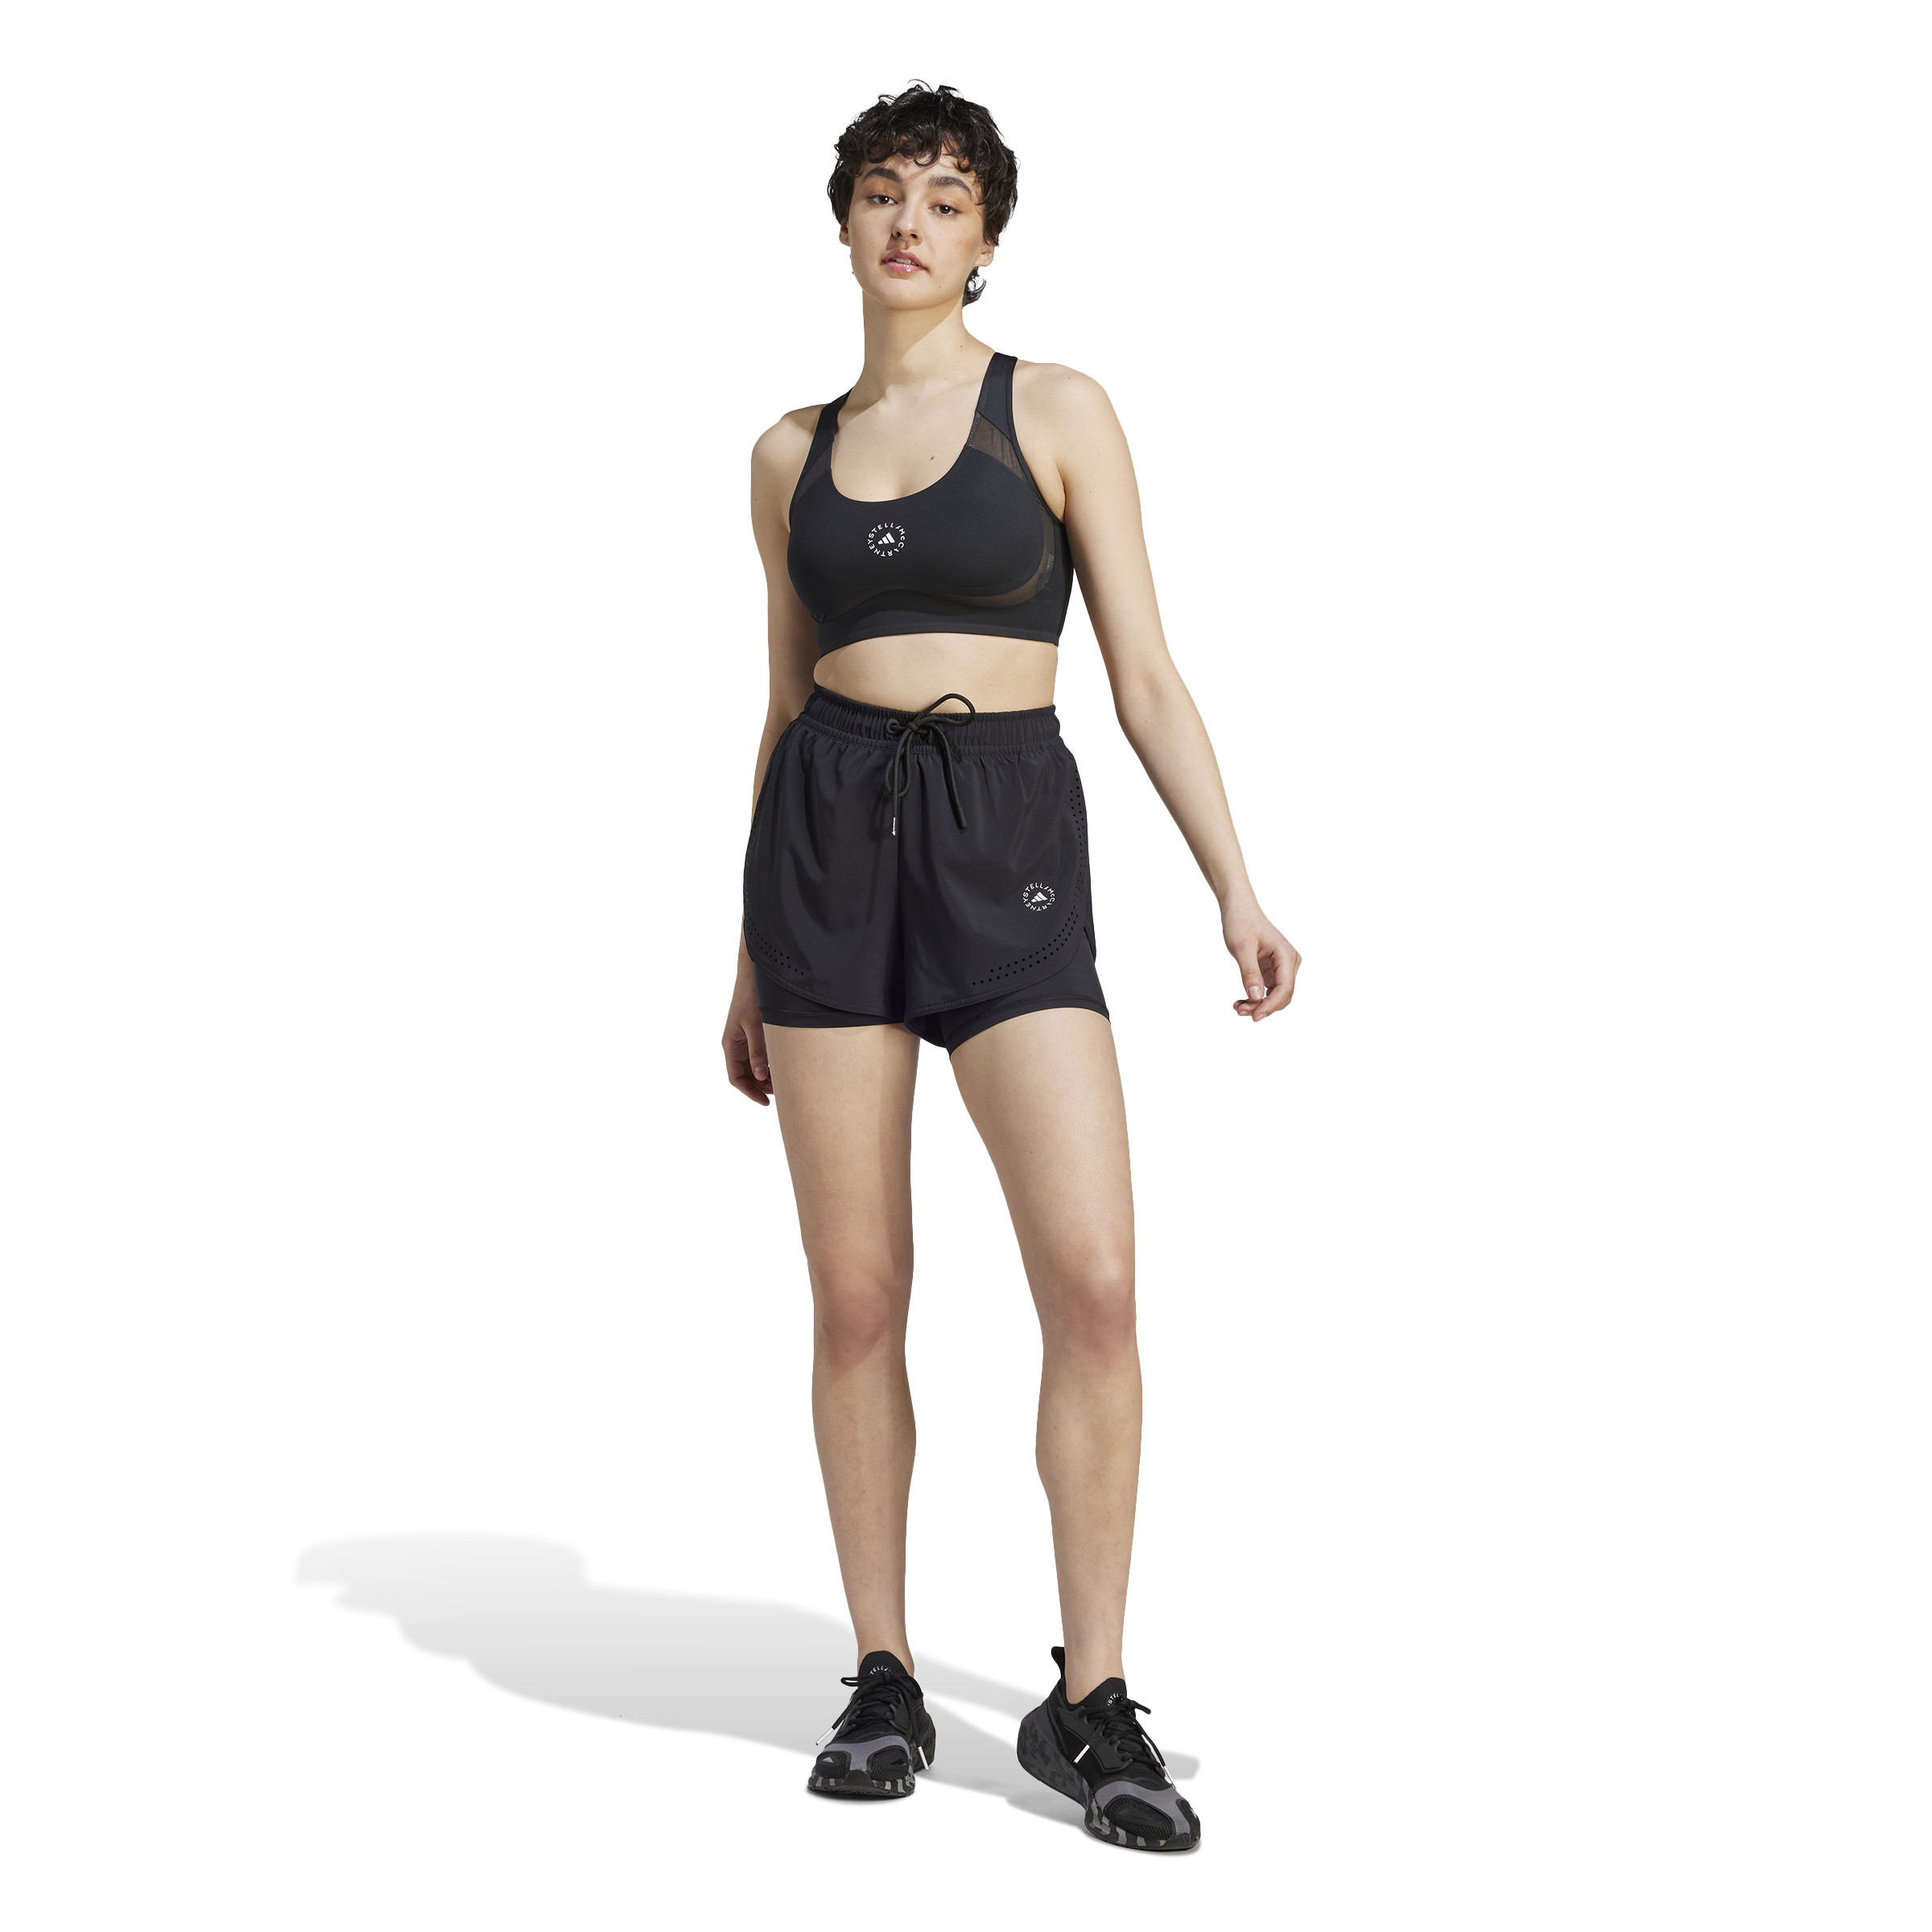 Adidas by Stella McCartney - TruePurpose 2-in-1 Training Shorts, Black, large image number 2